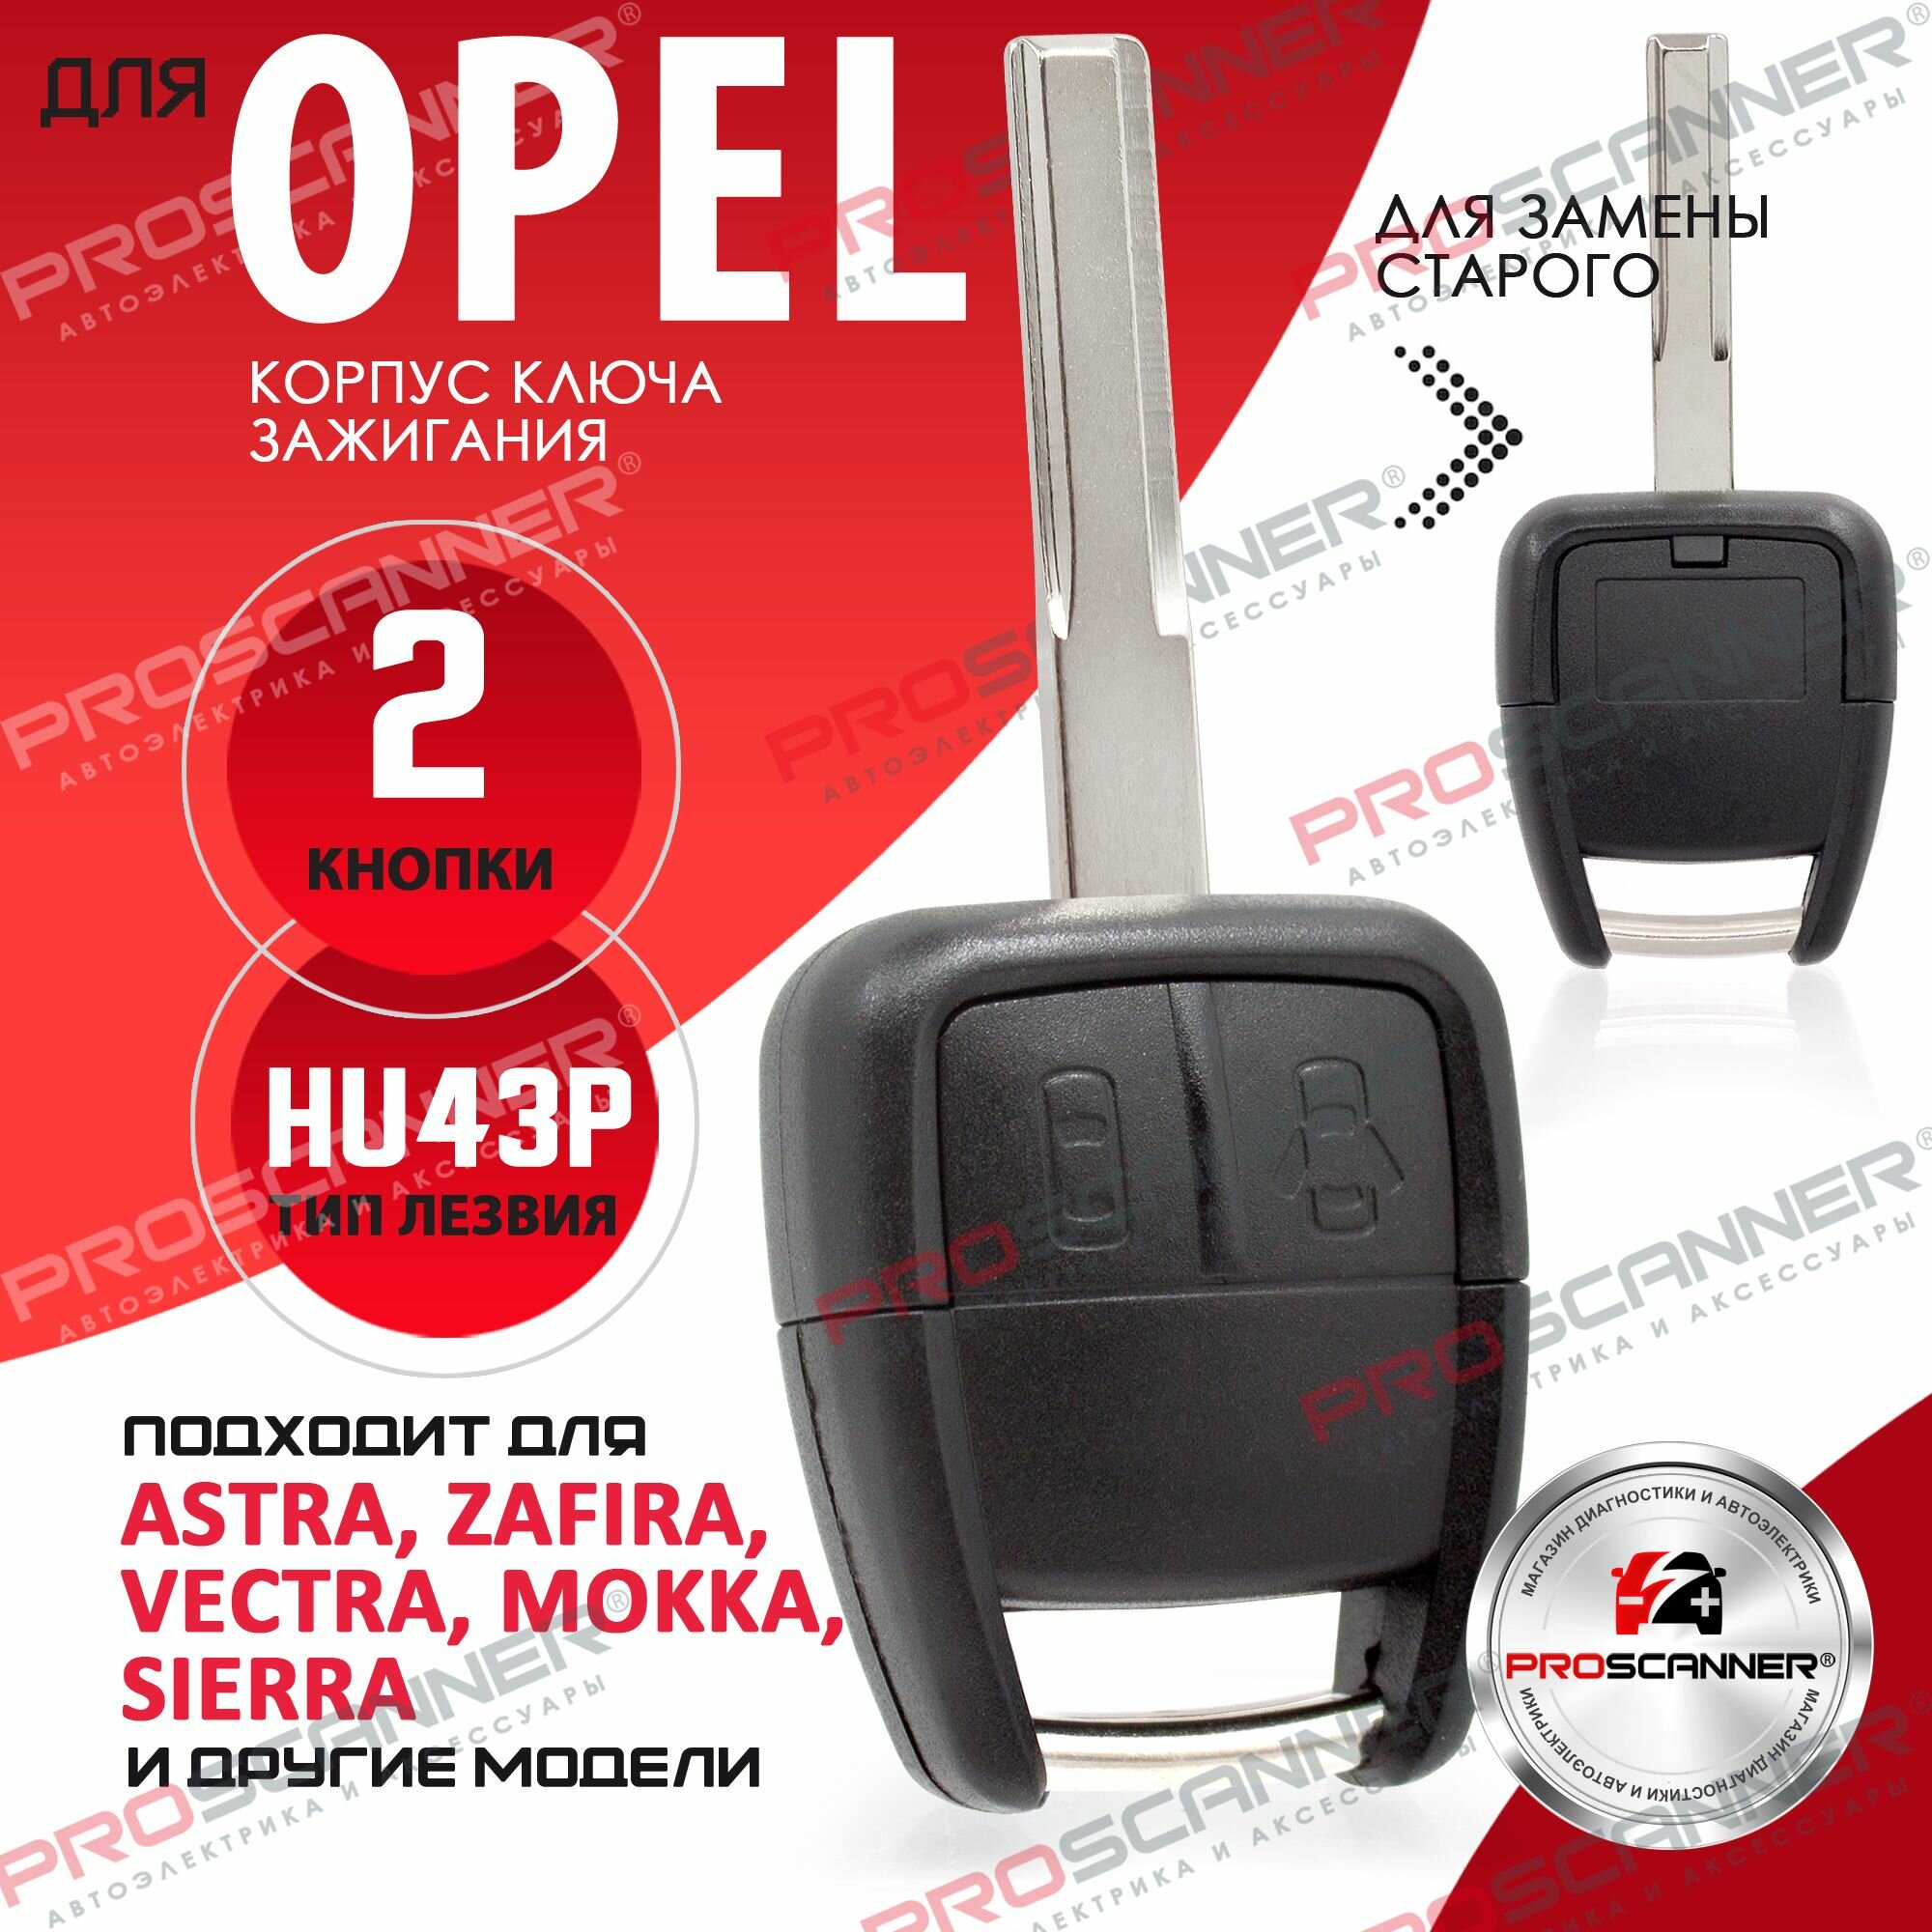 Корпус ключа зажигания для Opel Astra Zafira Omega Vectra Frontera - 1 штука (2х кнопочный ключ, лезвие HU43P)